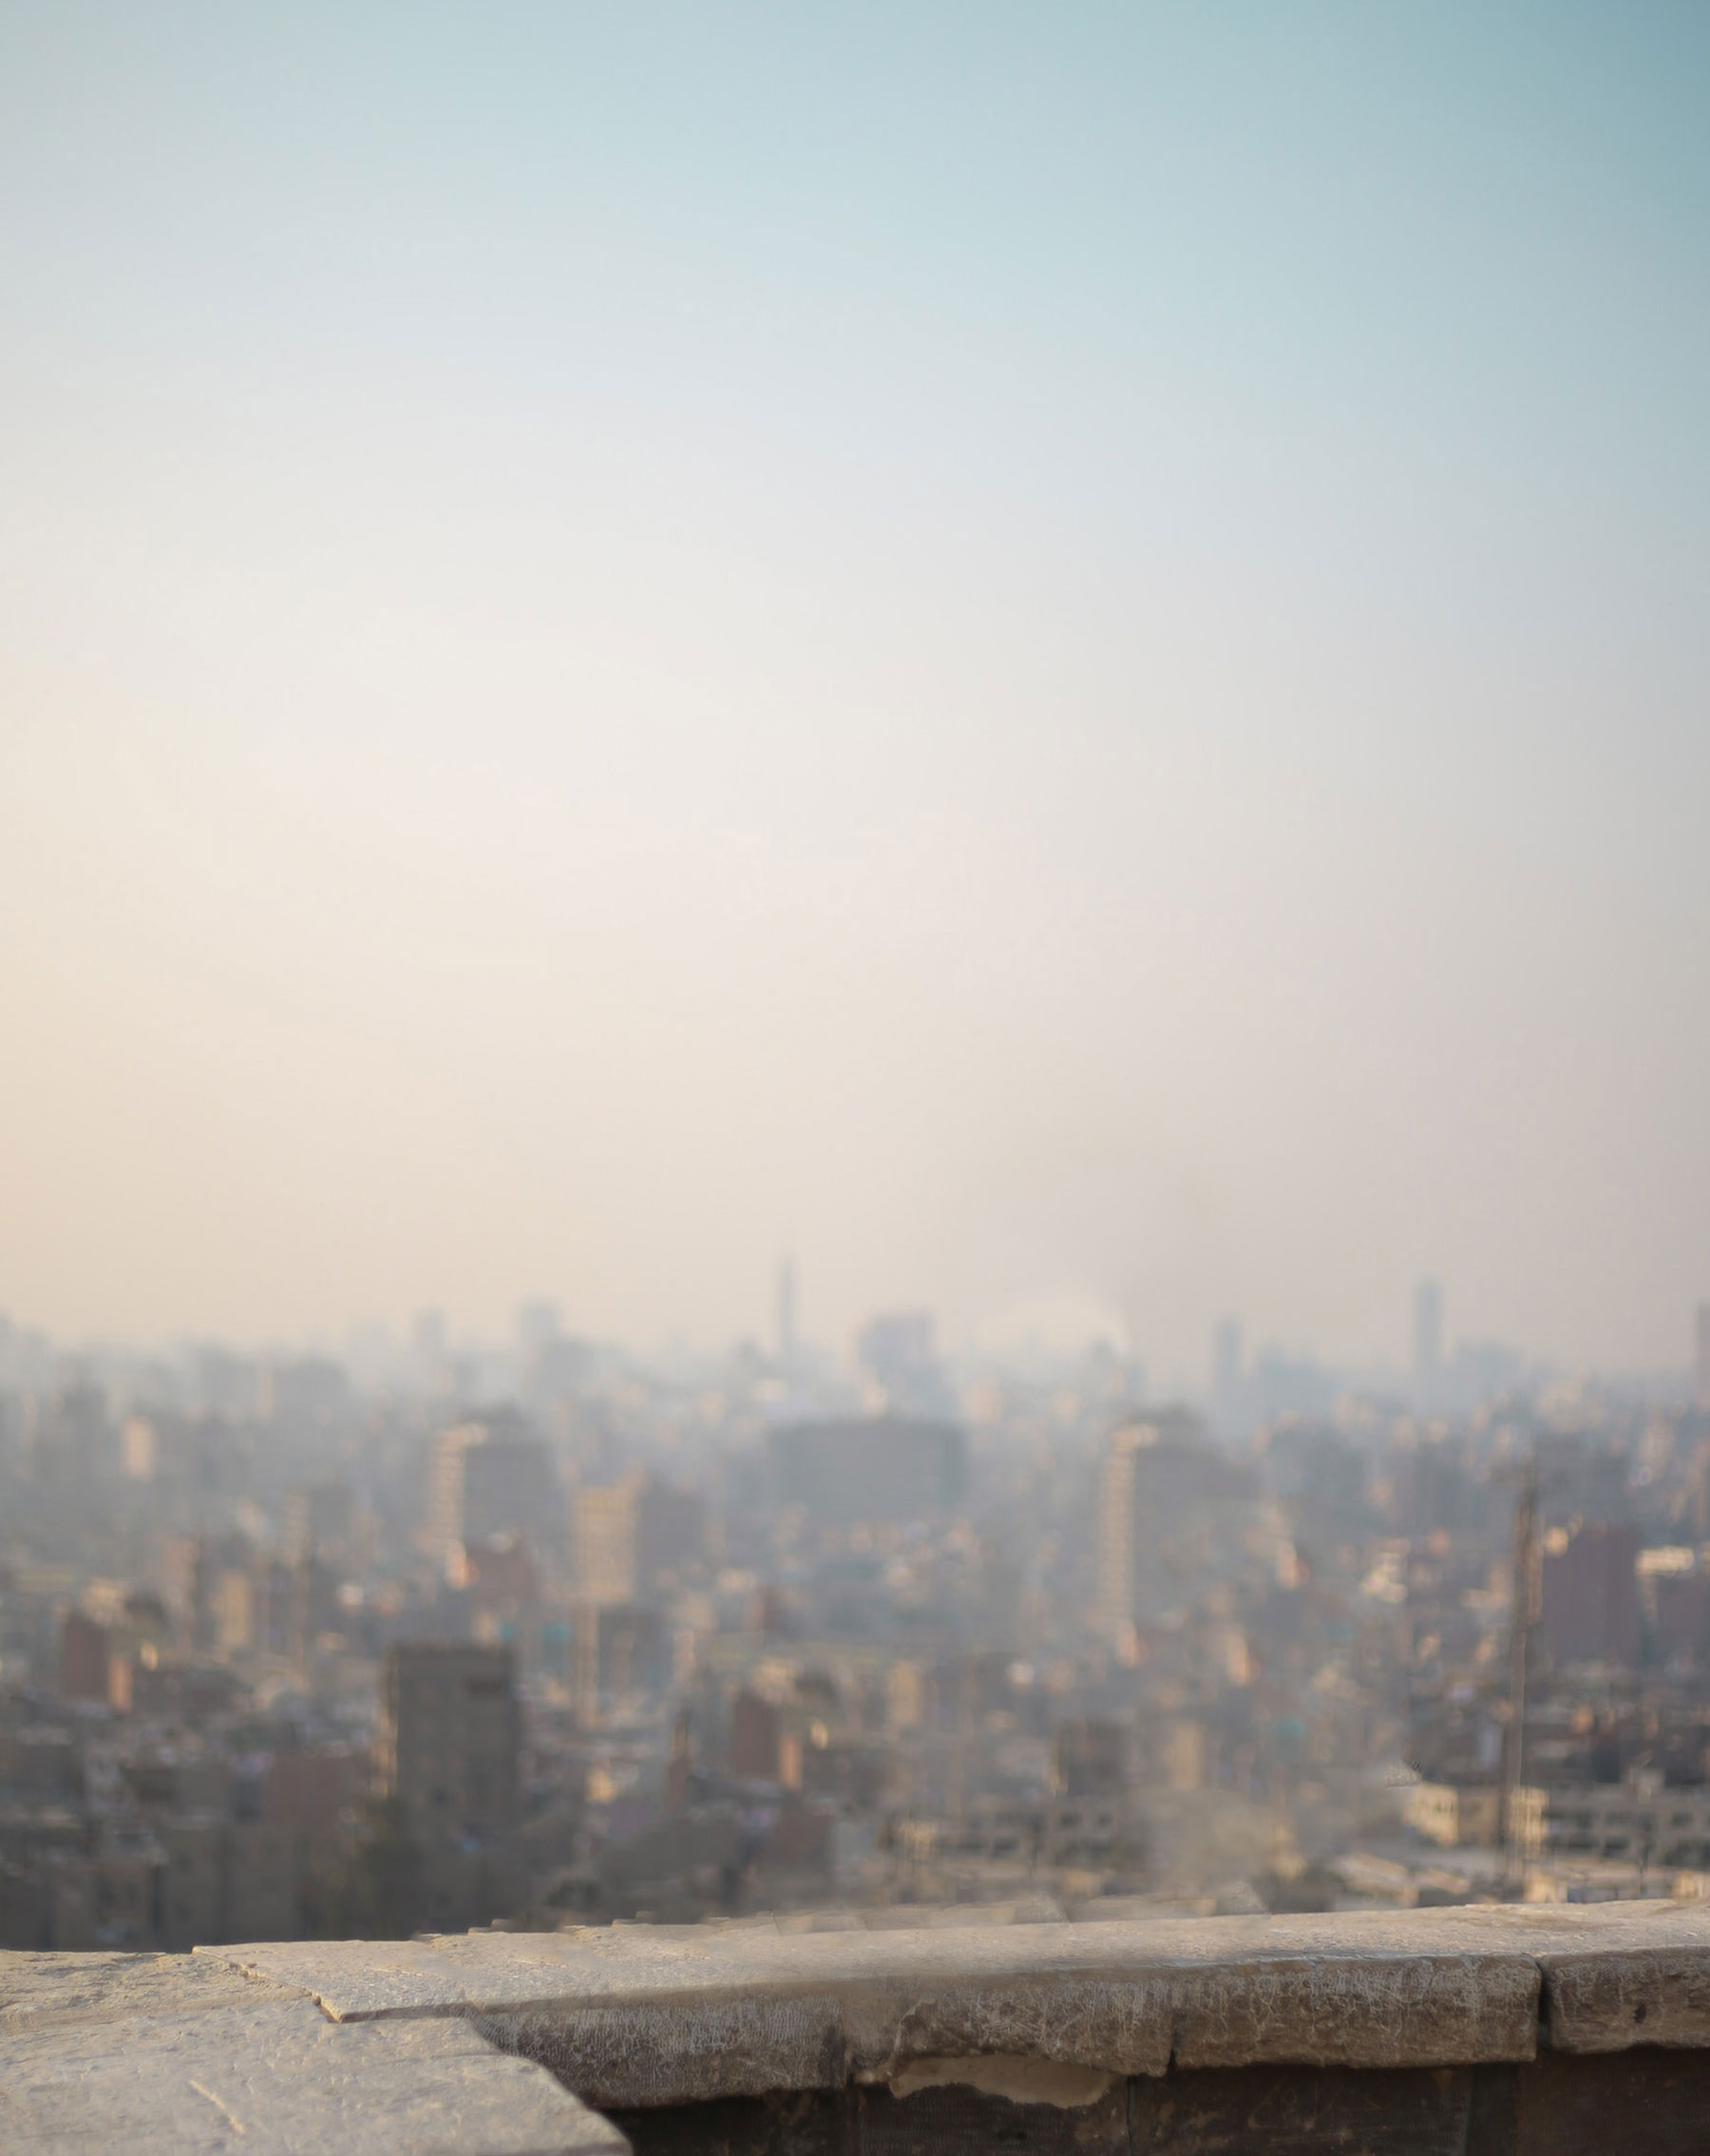 Smoky Blur City View Background Free Stock Image